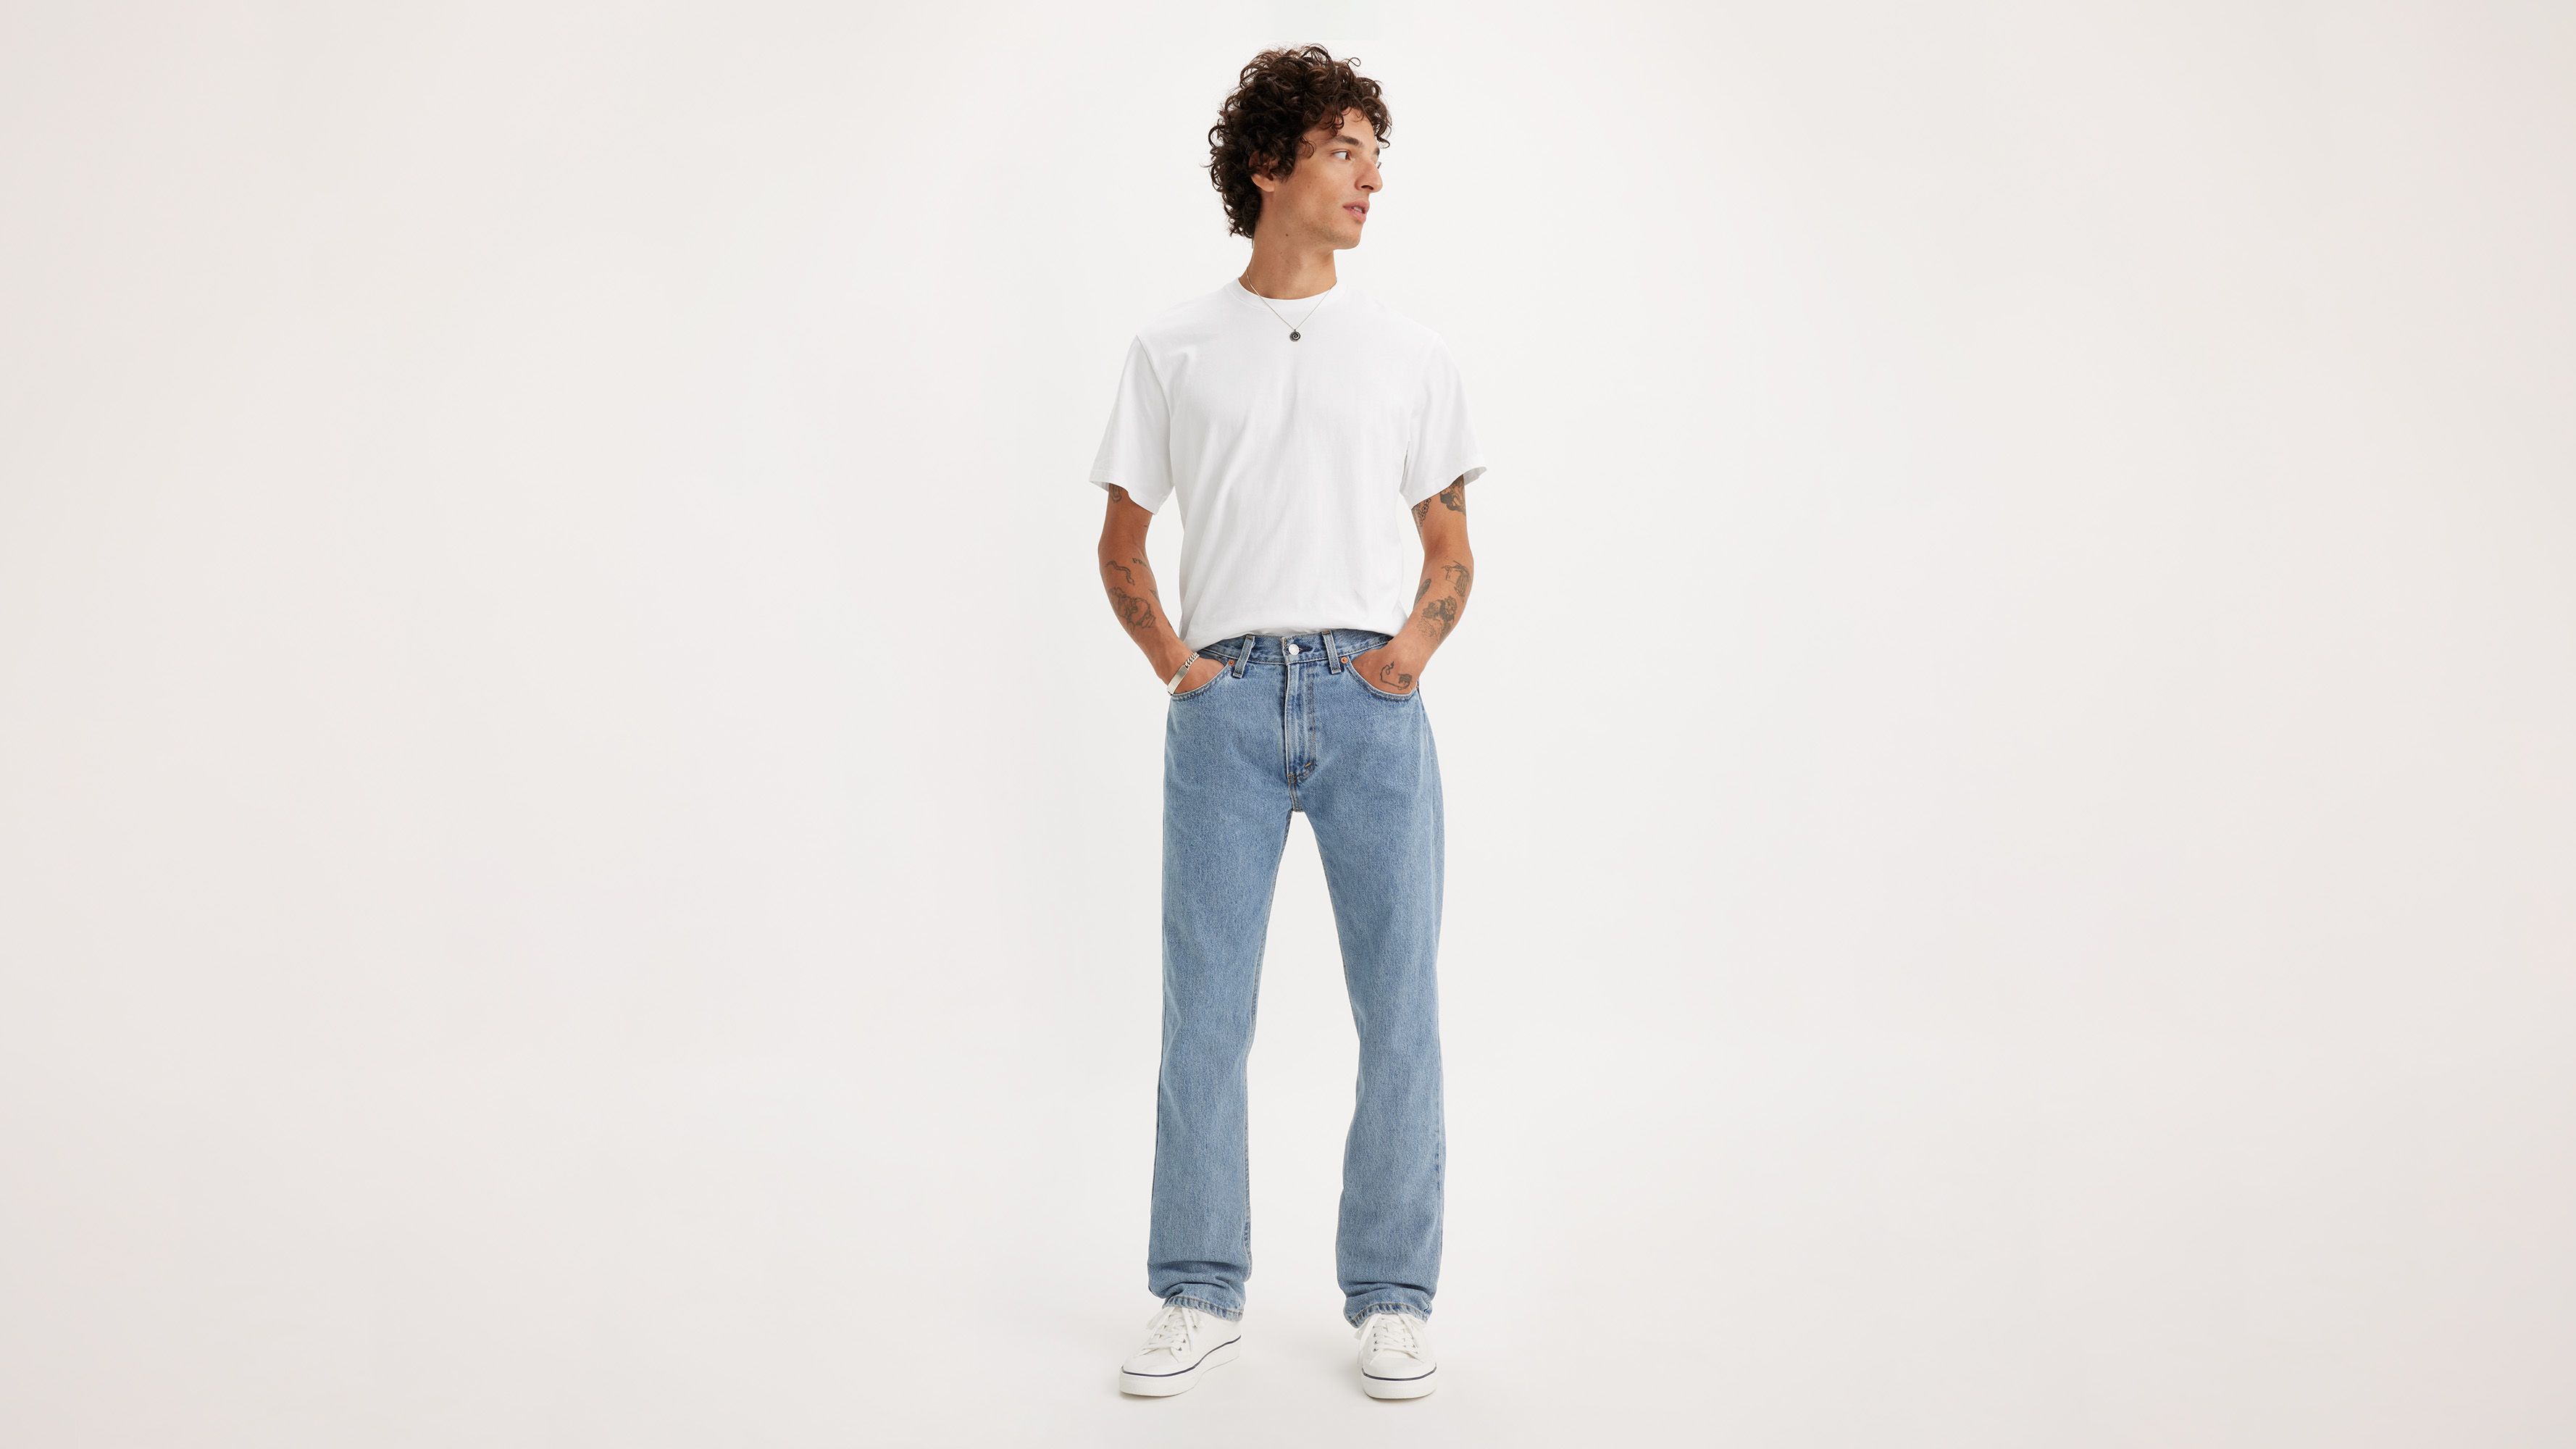 levis 505 skinny jeans